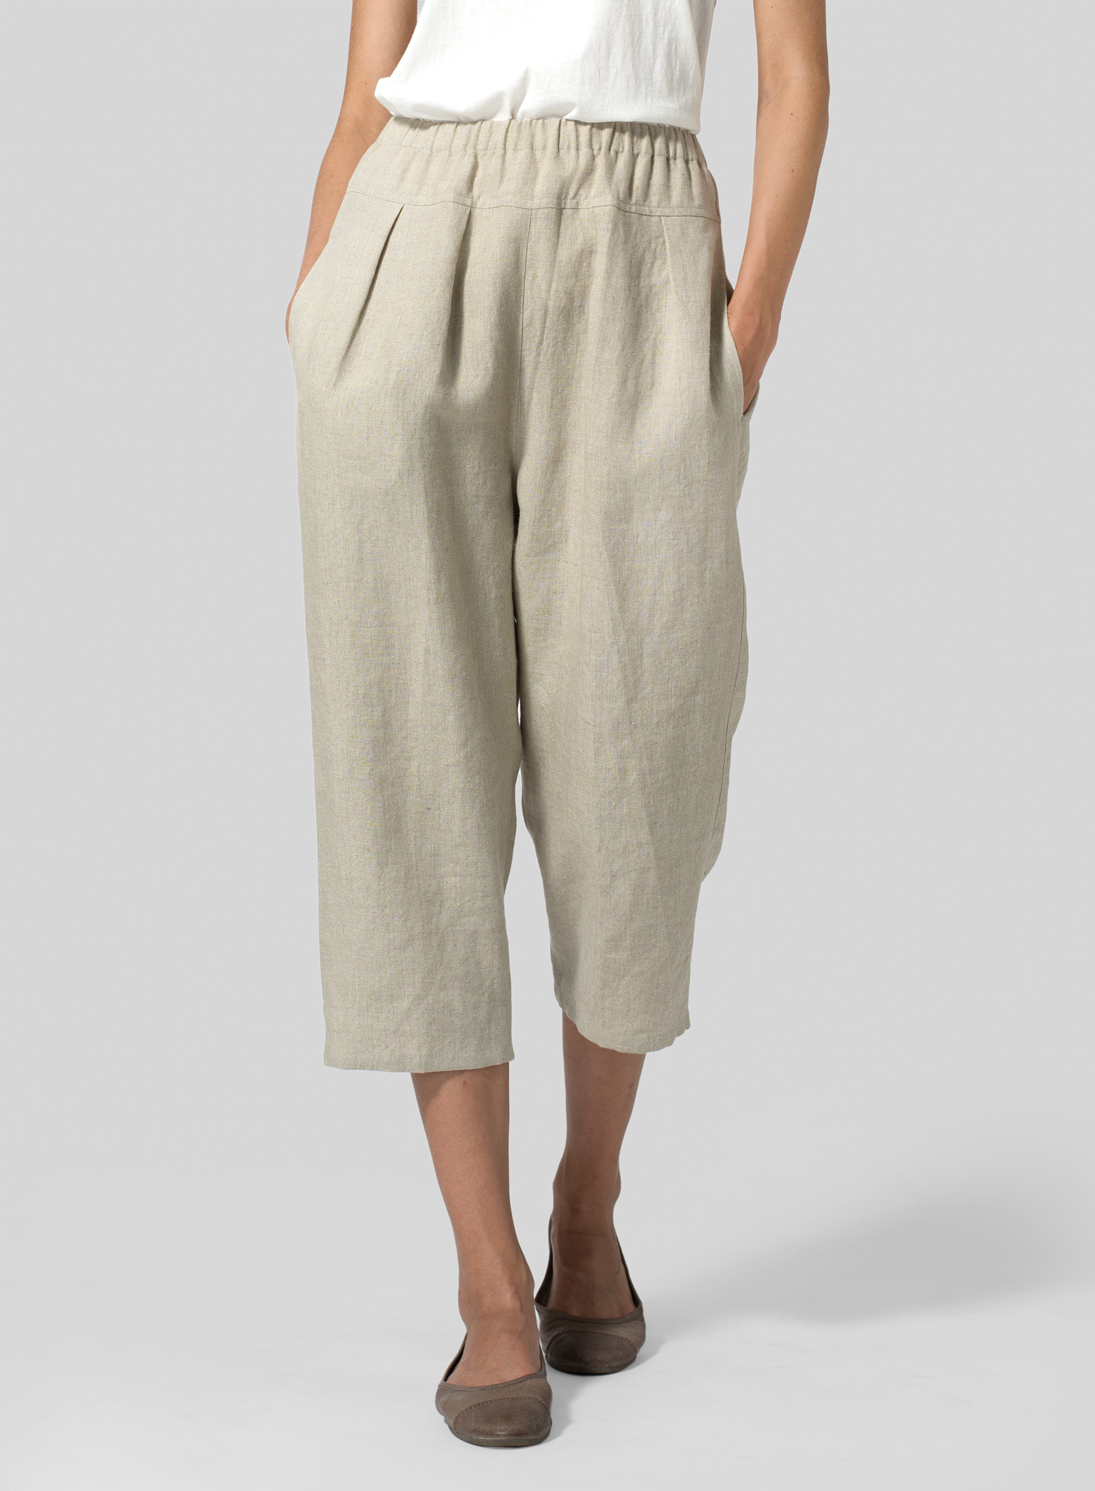 Efsteb Cotton Linen Pants for Women 2023 Fashion High Waist Short